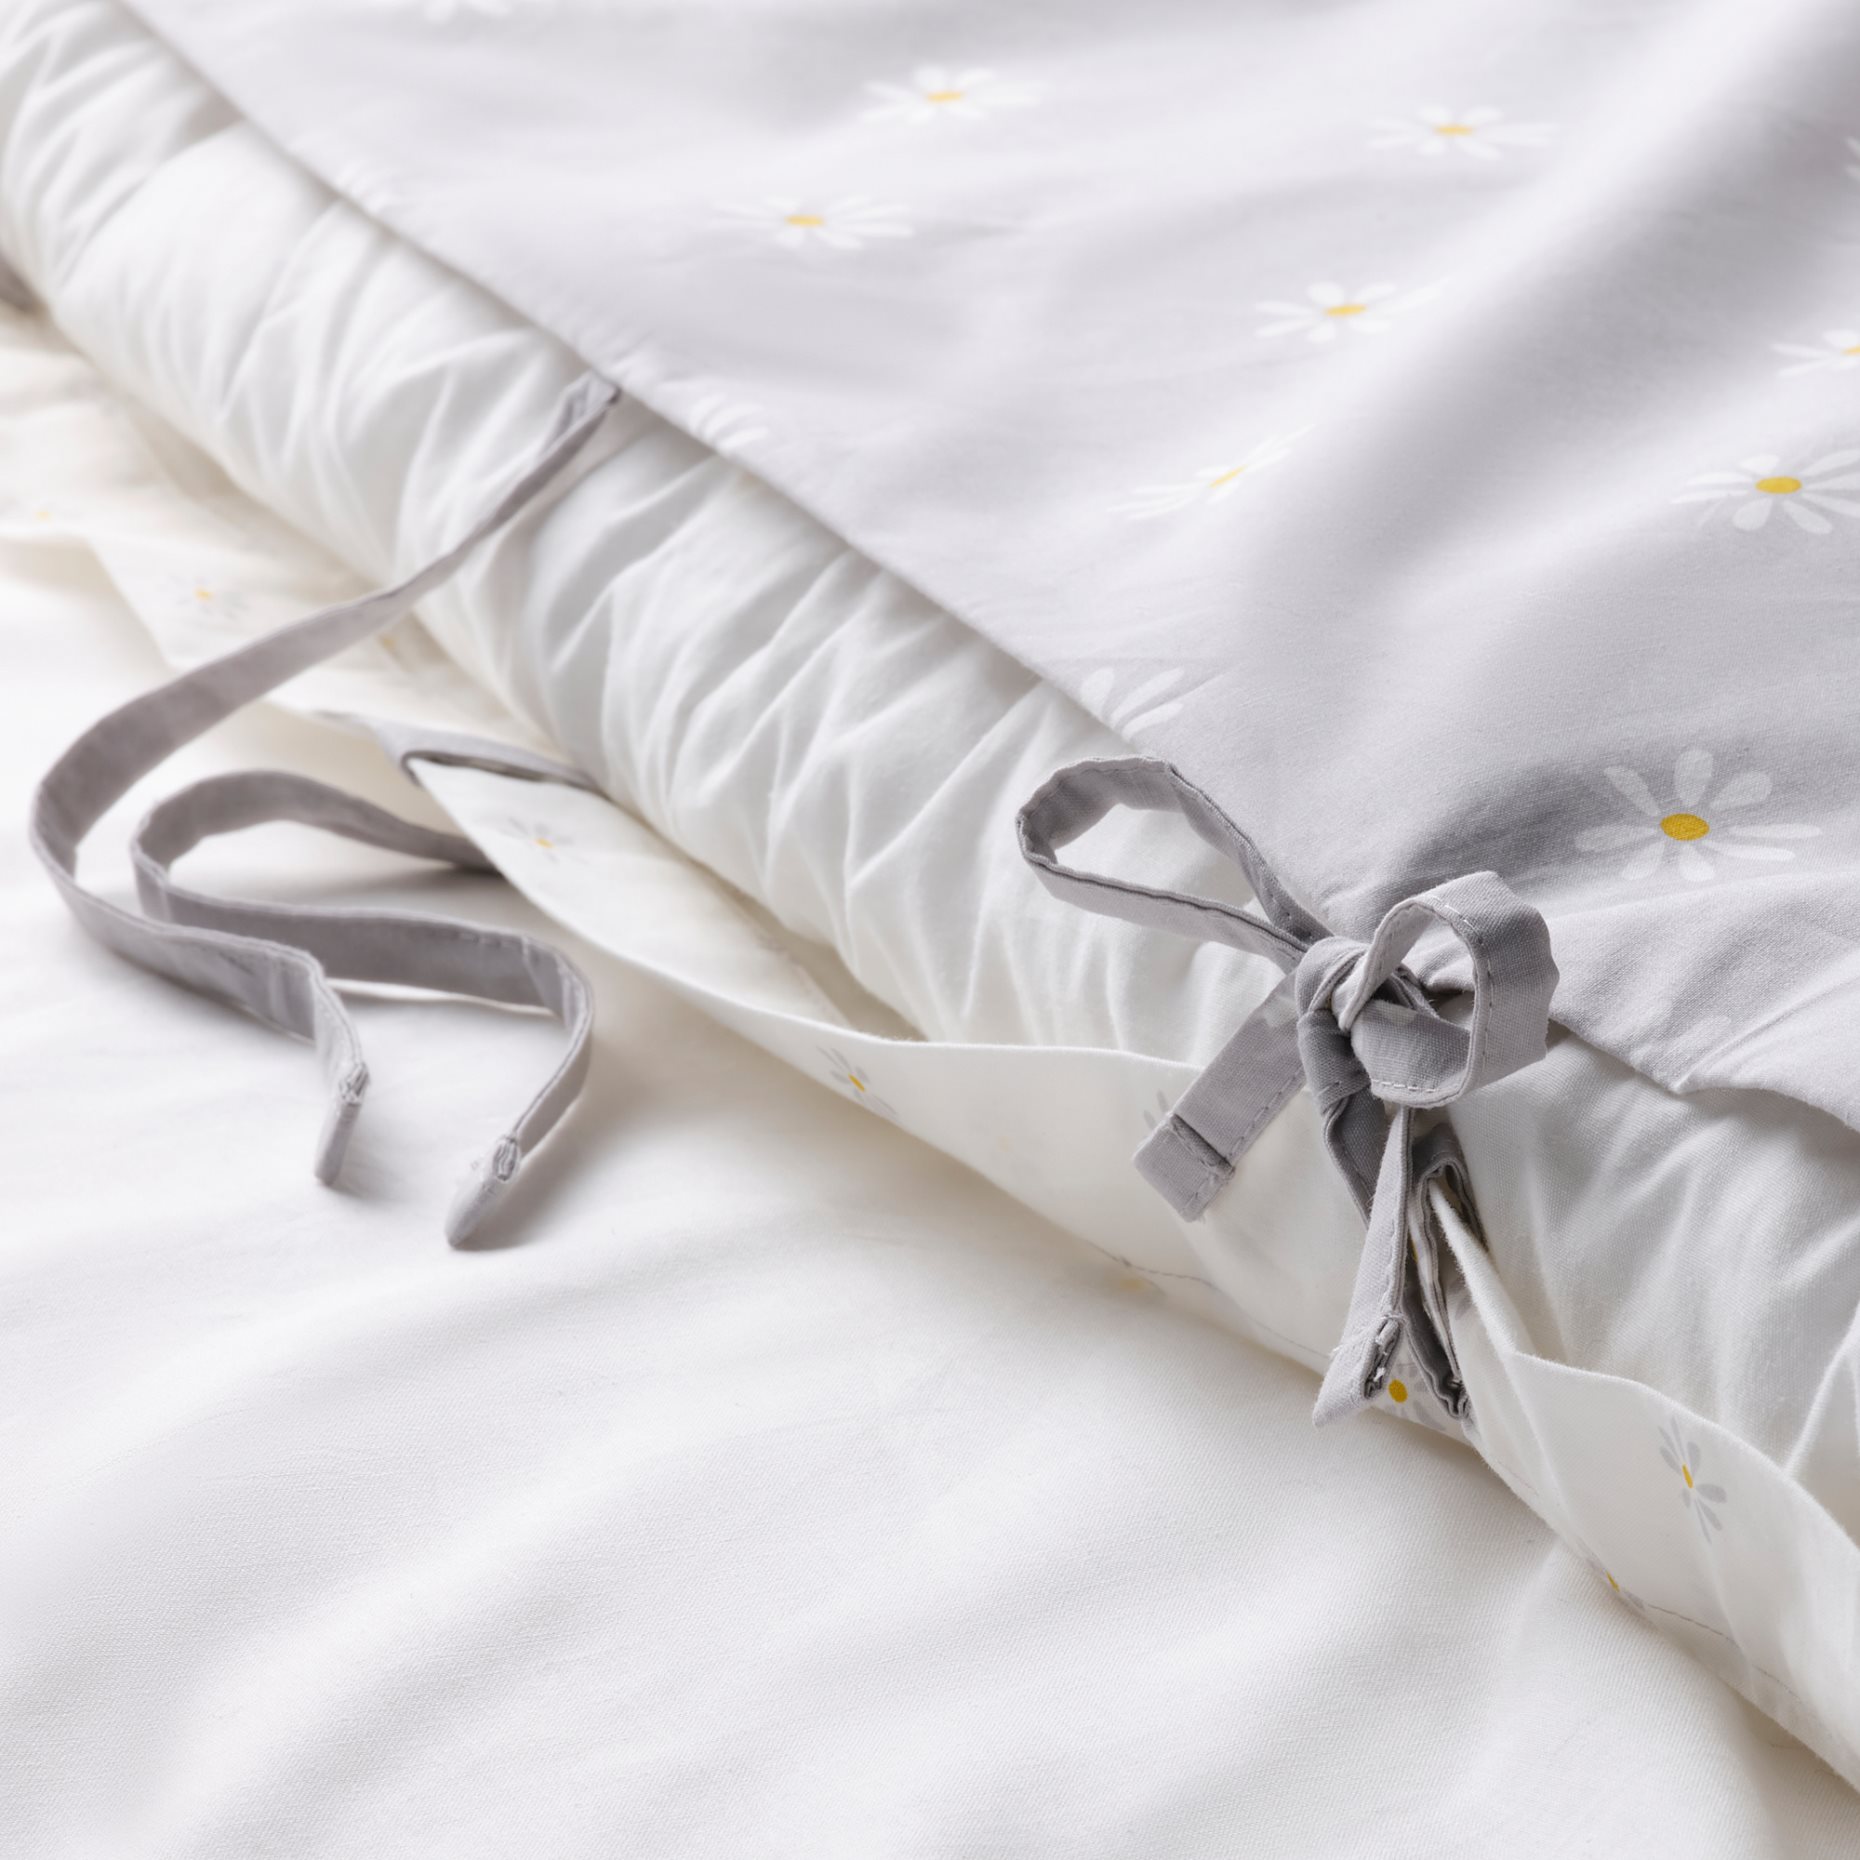 NATTSLÄNDA, duvet cover and pillowcase/floral pattern, 150x200/50x60 cm, 305.080.21